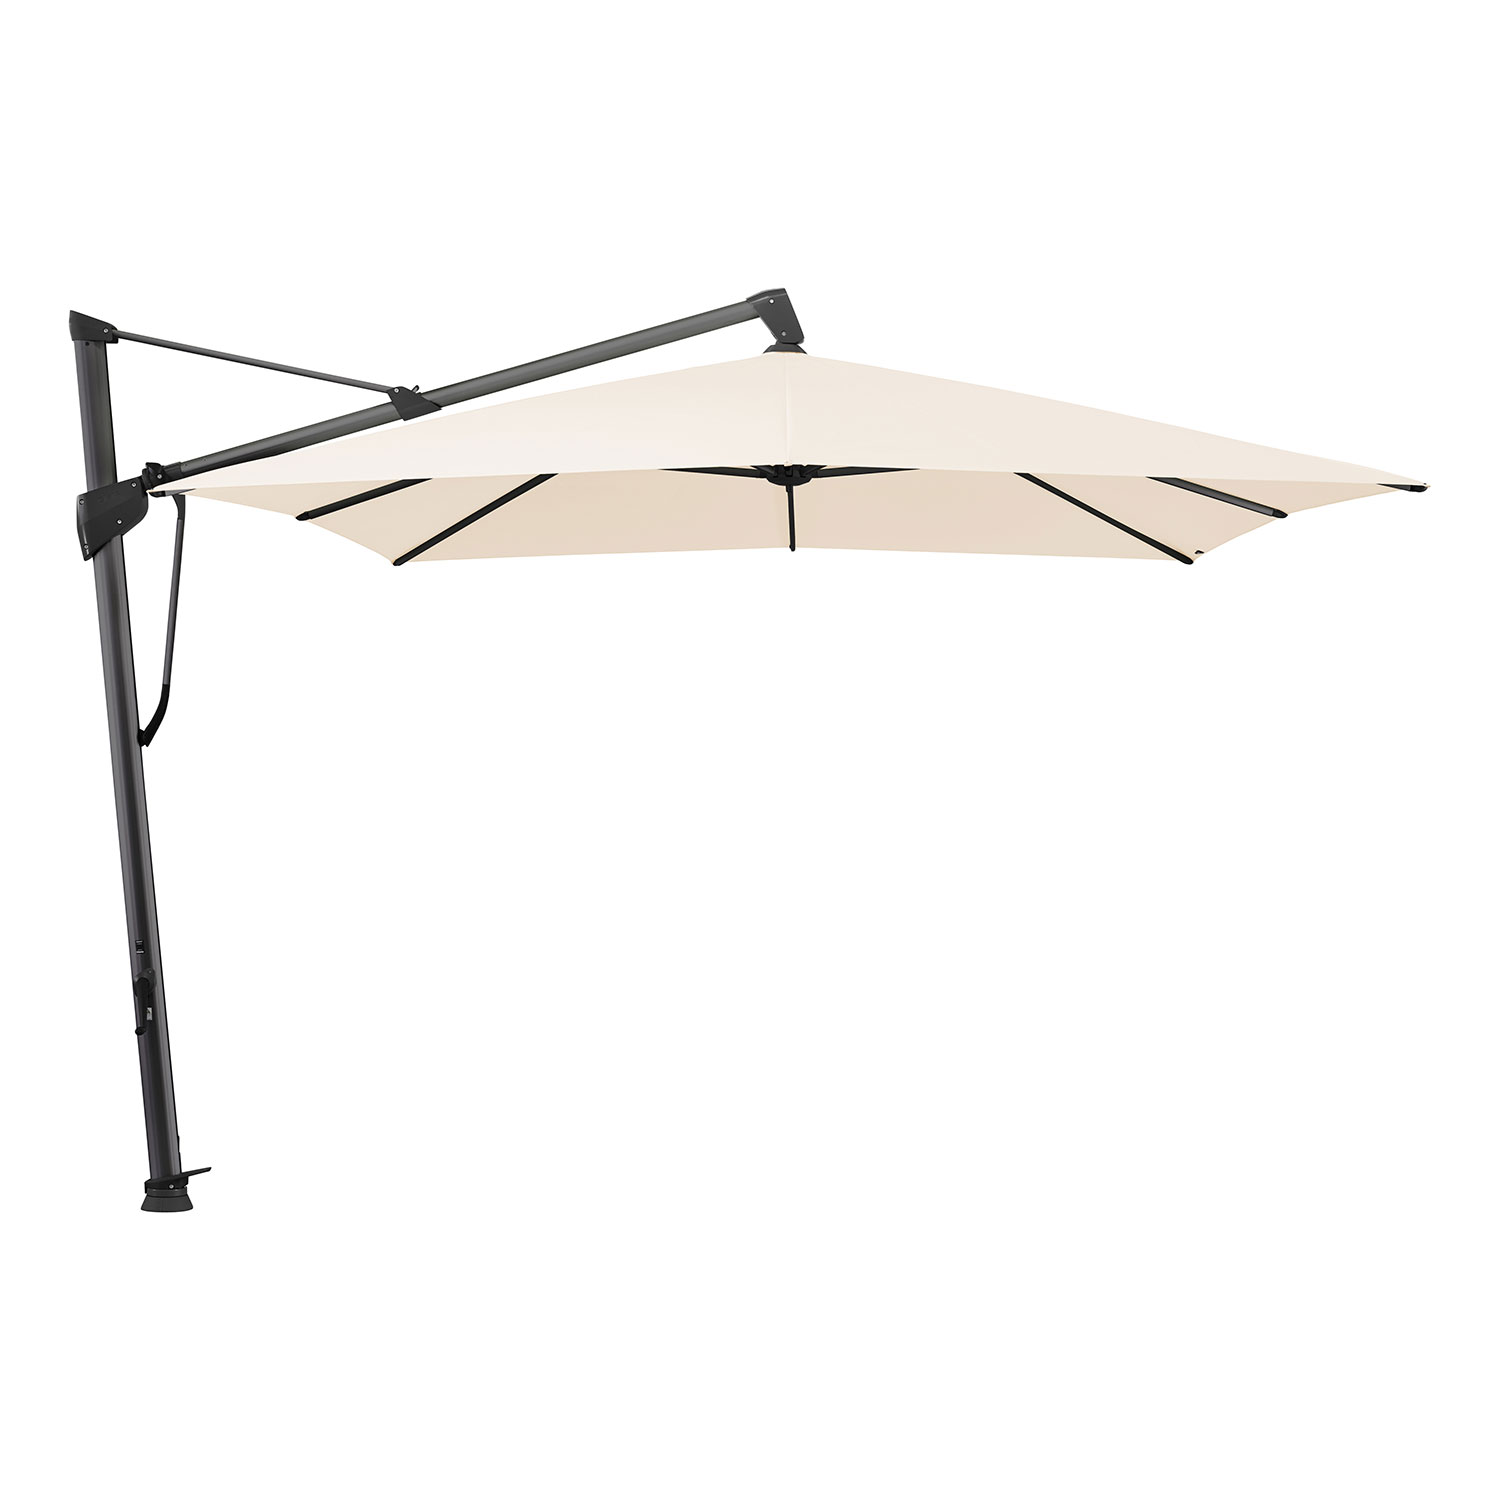 Glatz Sombrano S+ frihängande parasoll 400×300 cm kat.5 antracite alu / 523 champagne